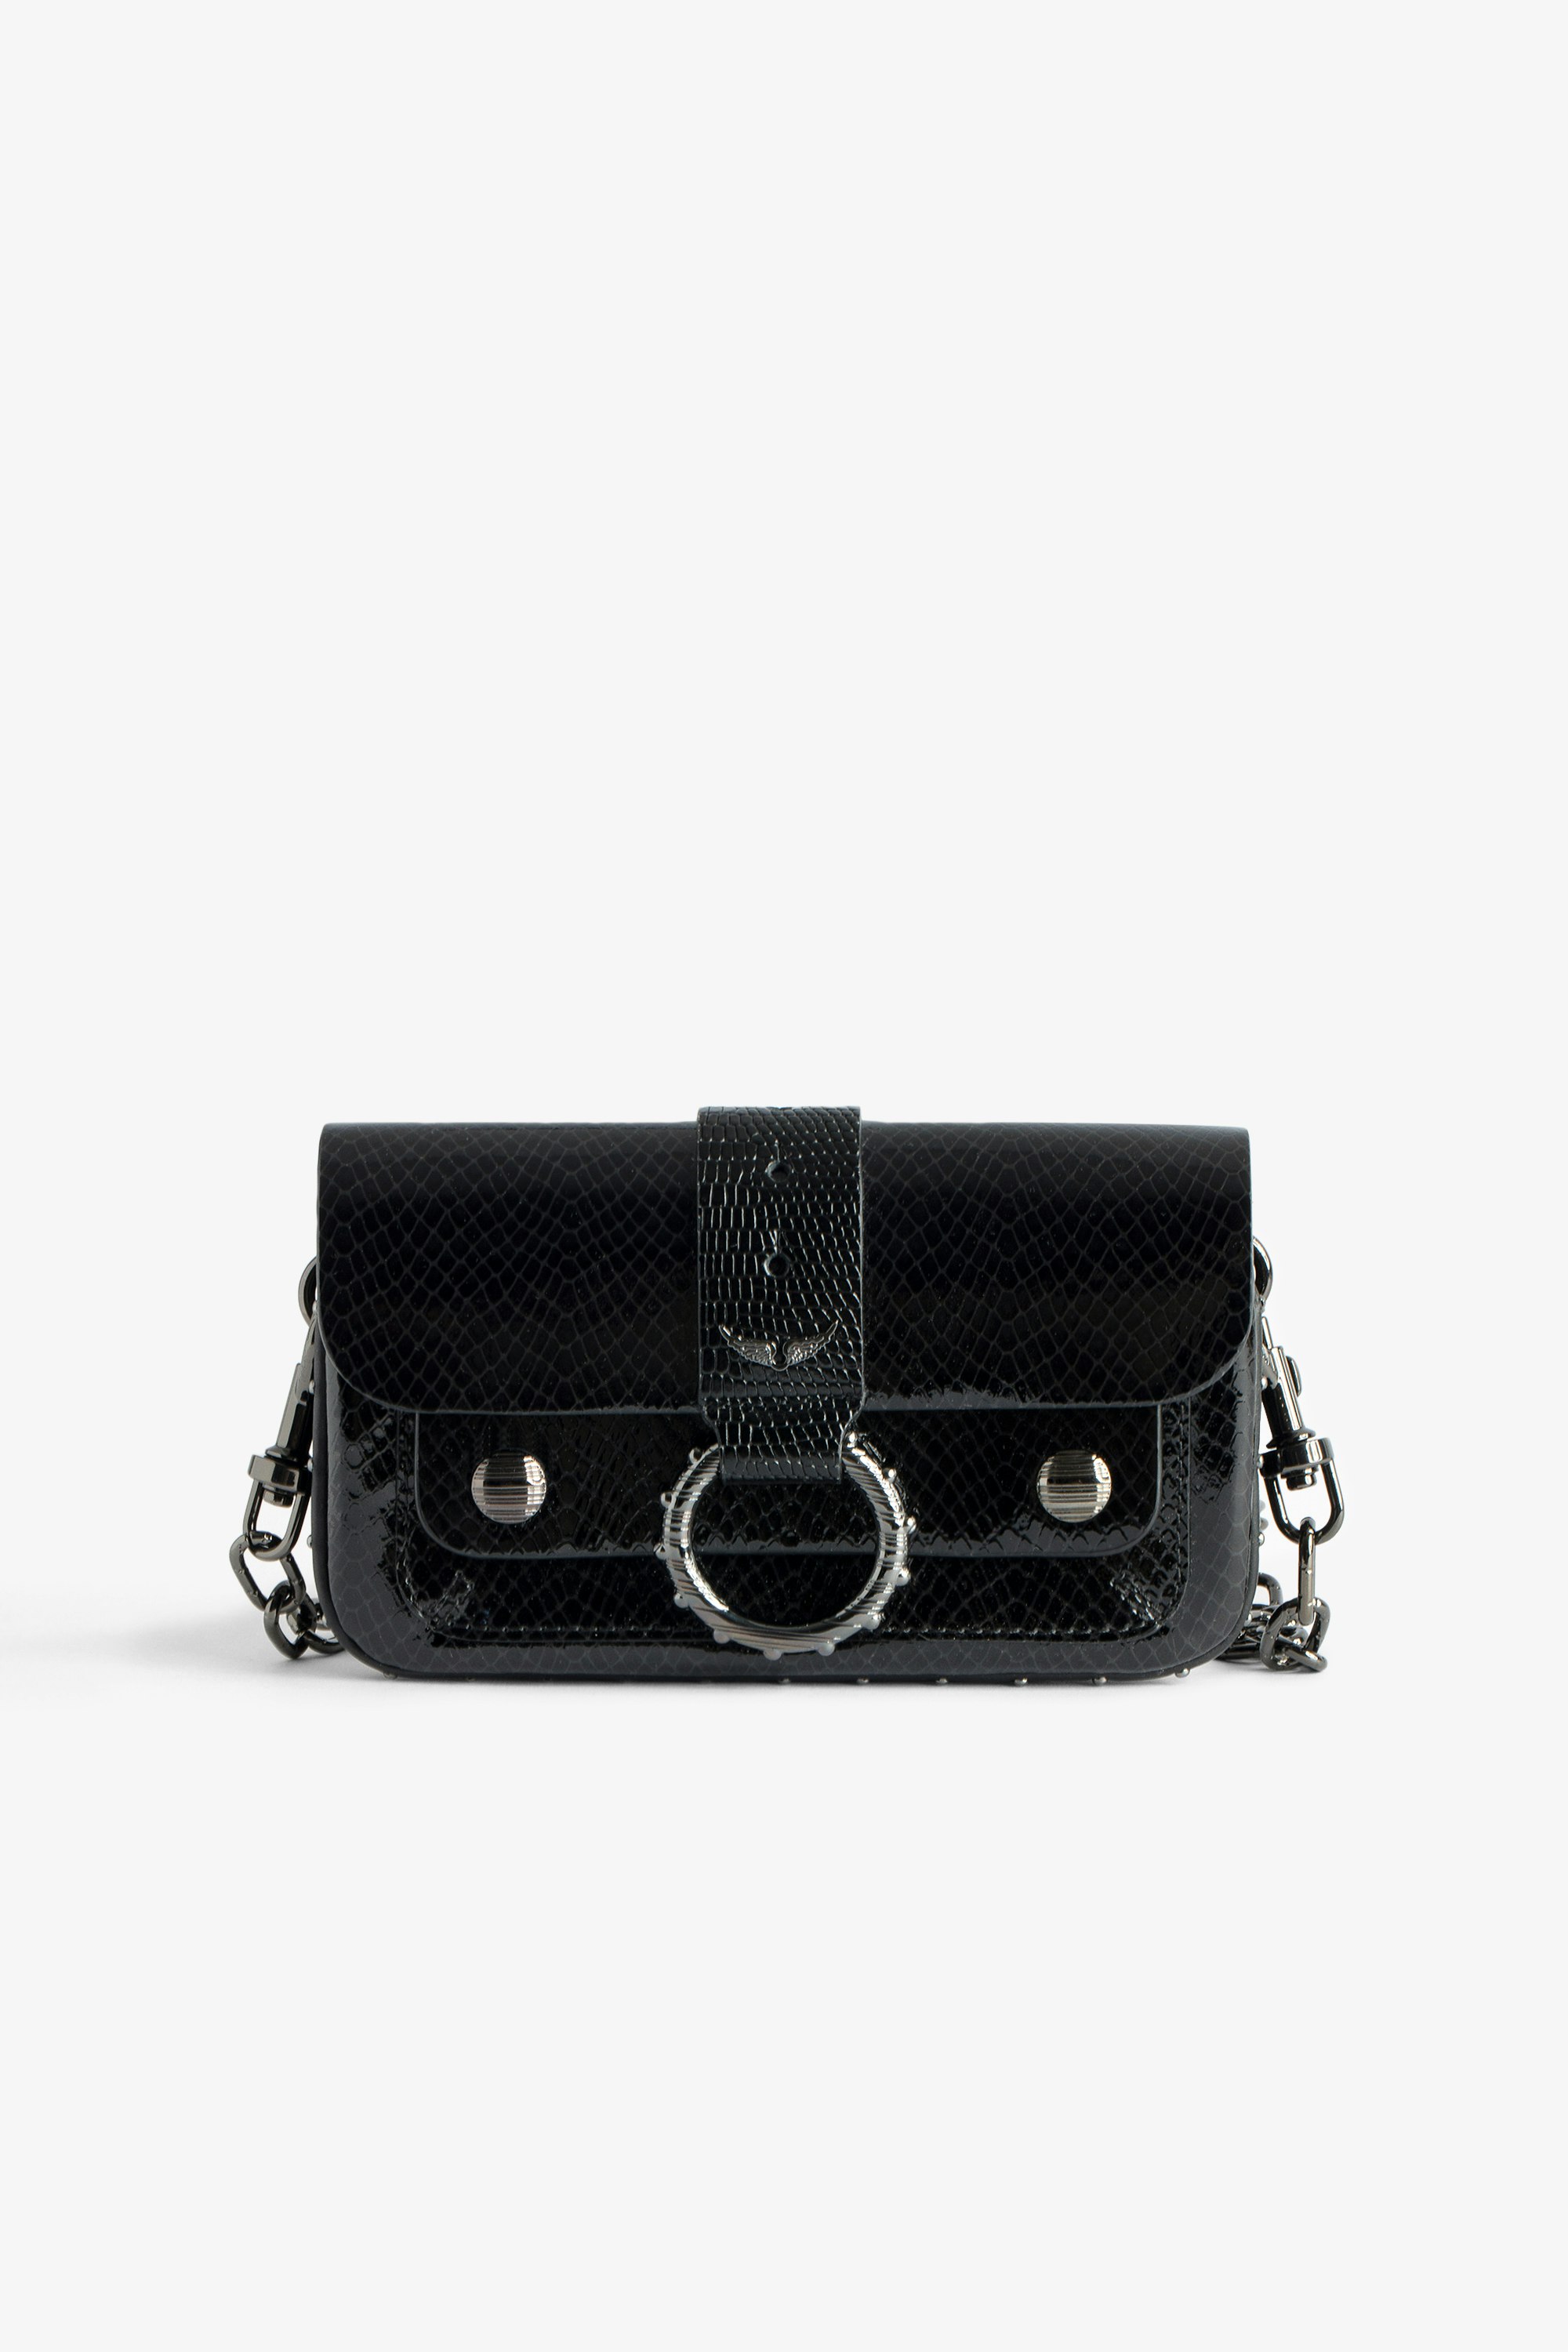 Sac Kate Wallet Glossy Wild Embossé Mini sac en cuir embossé brillant noir effet iguane à chaîne en métal.